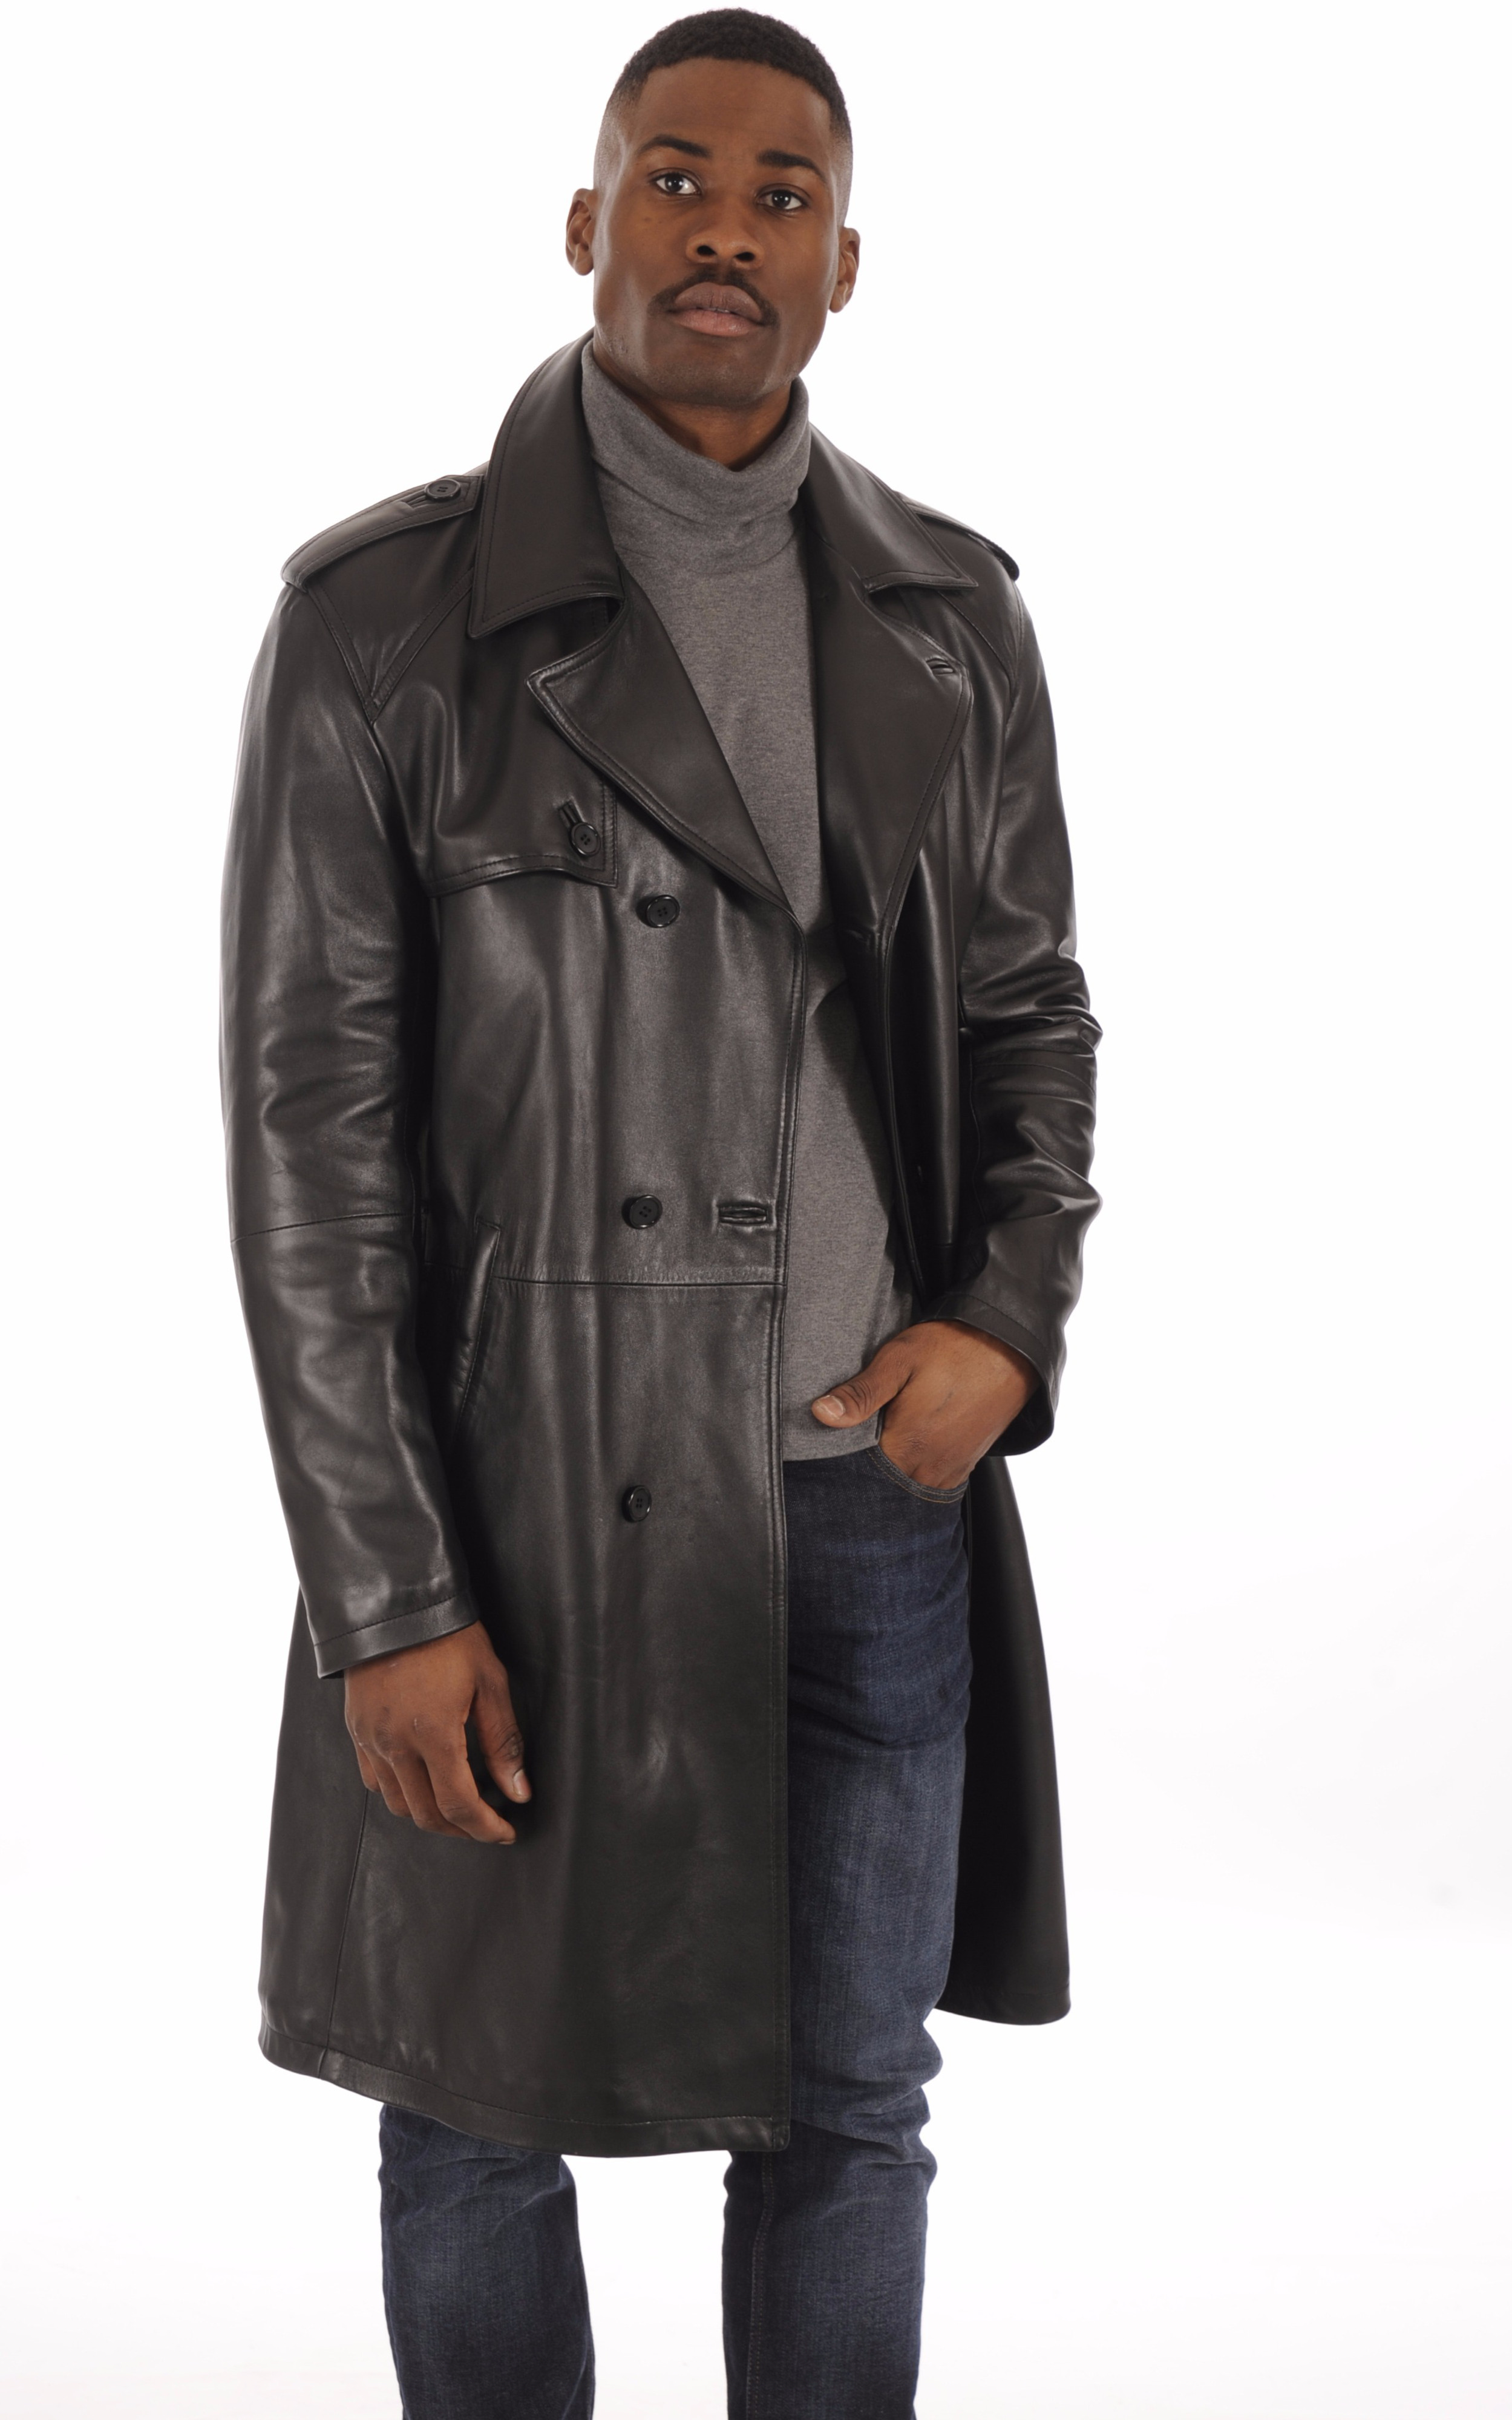 manteau en cuir noir homme